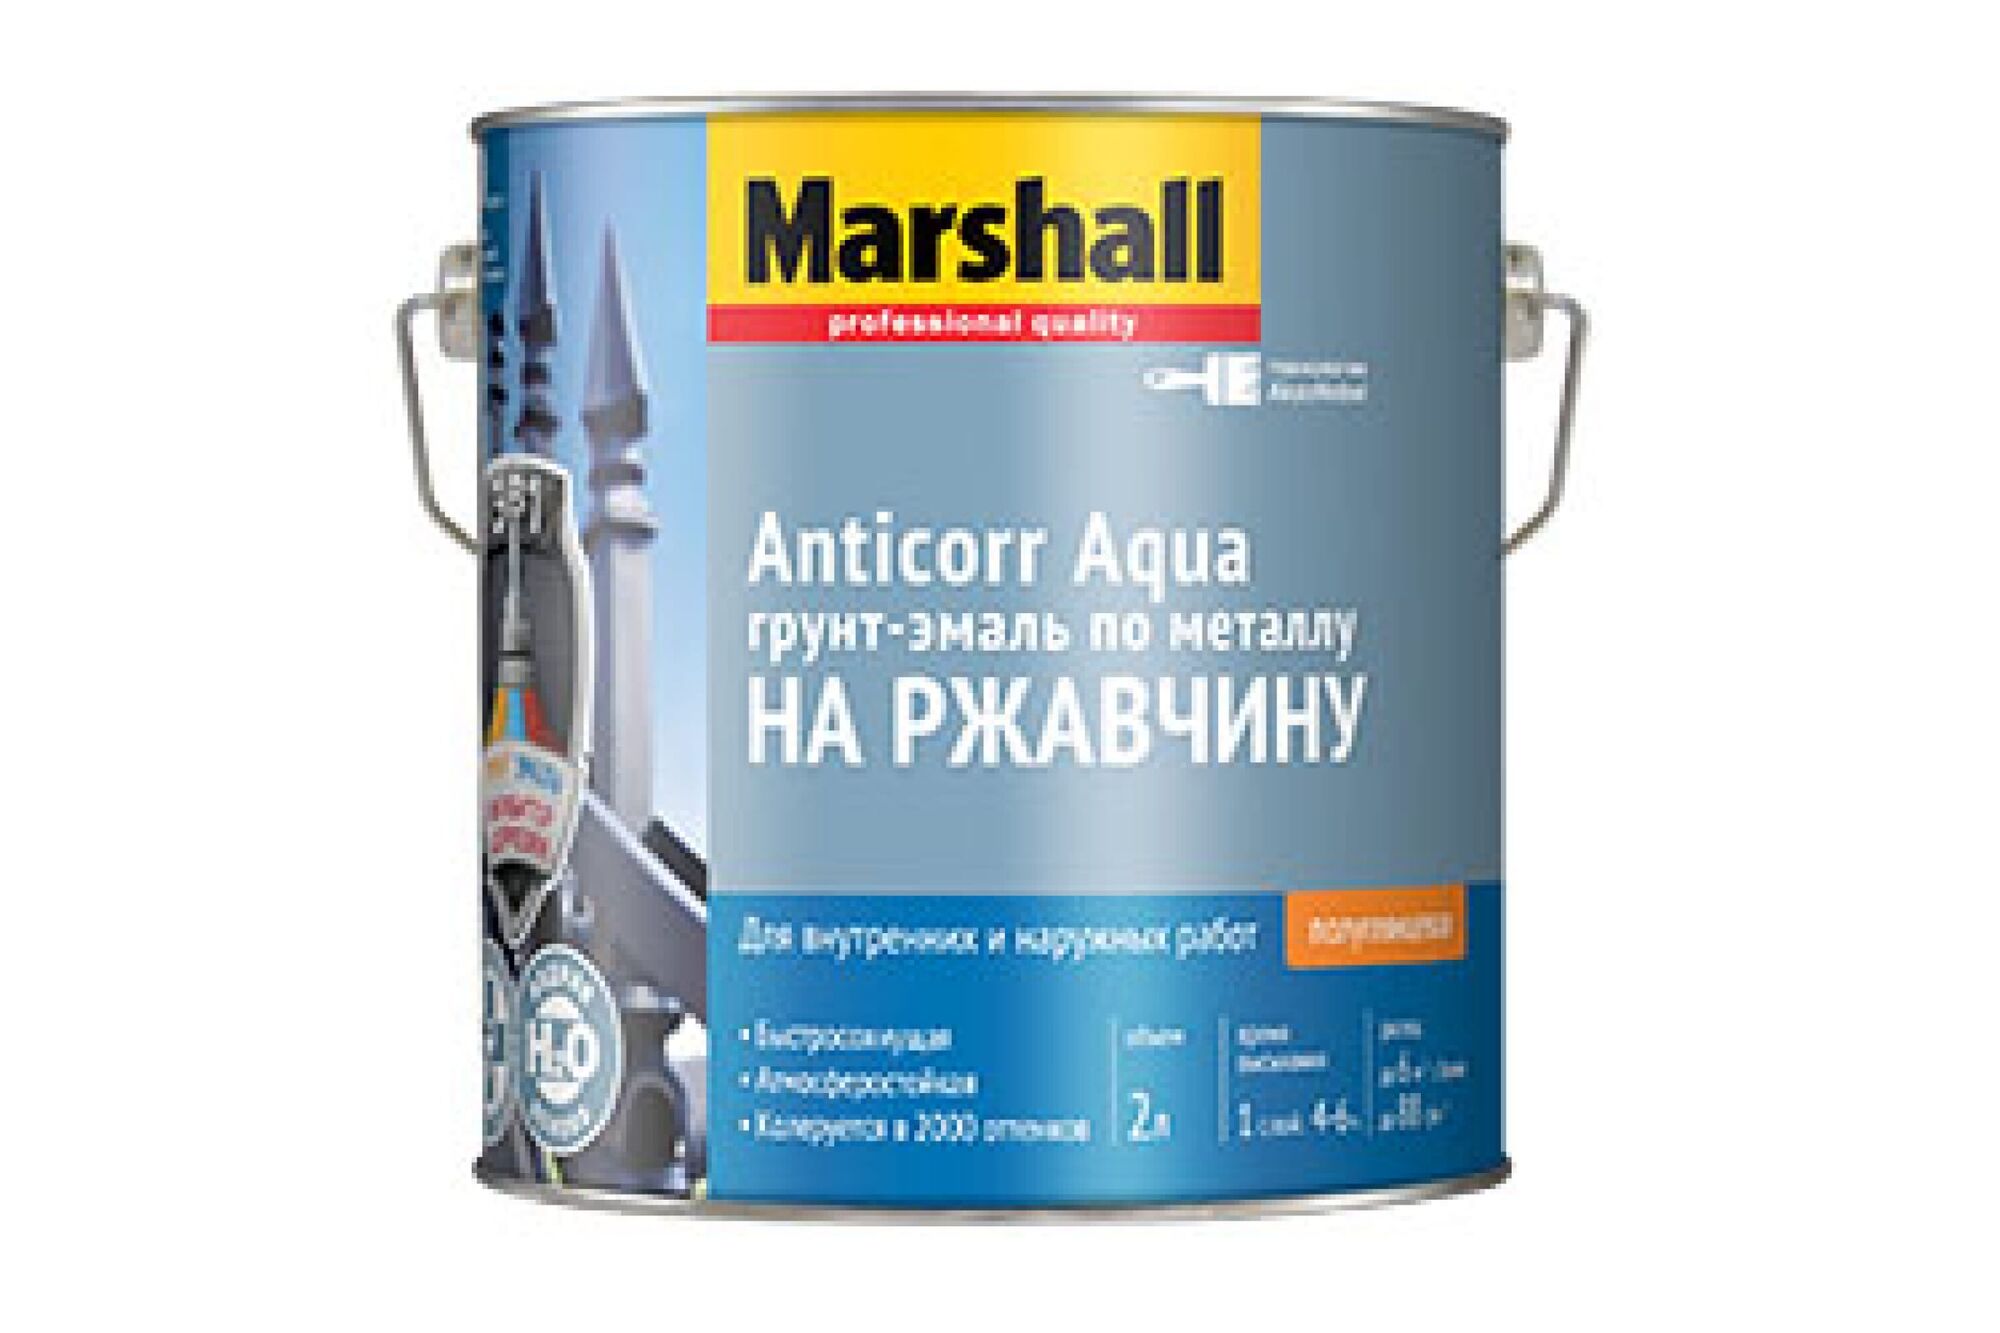 Marshall Anticorr Aqua грунт-эмаль по металлу на ржавчину на водной основе BW (0,5л) Marshall (Маршал)